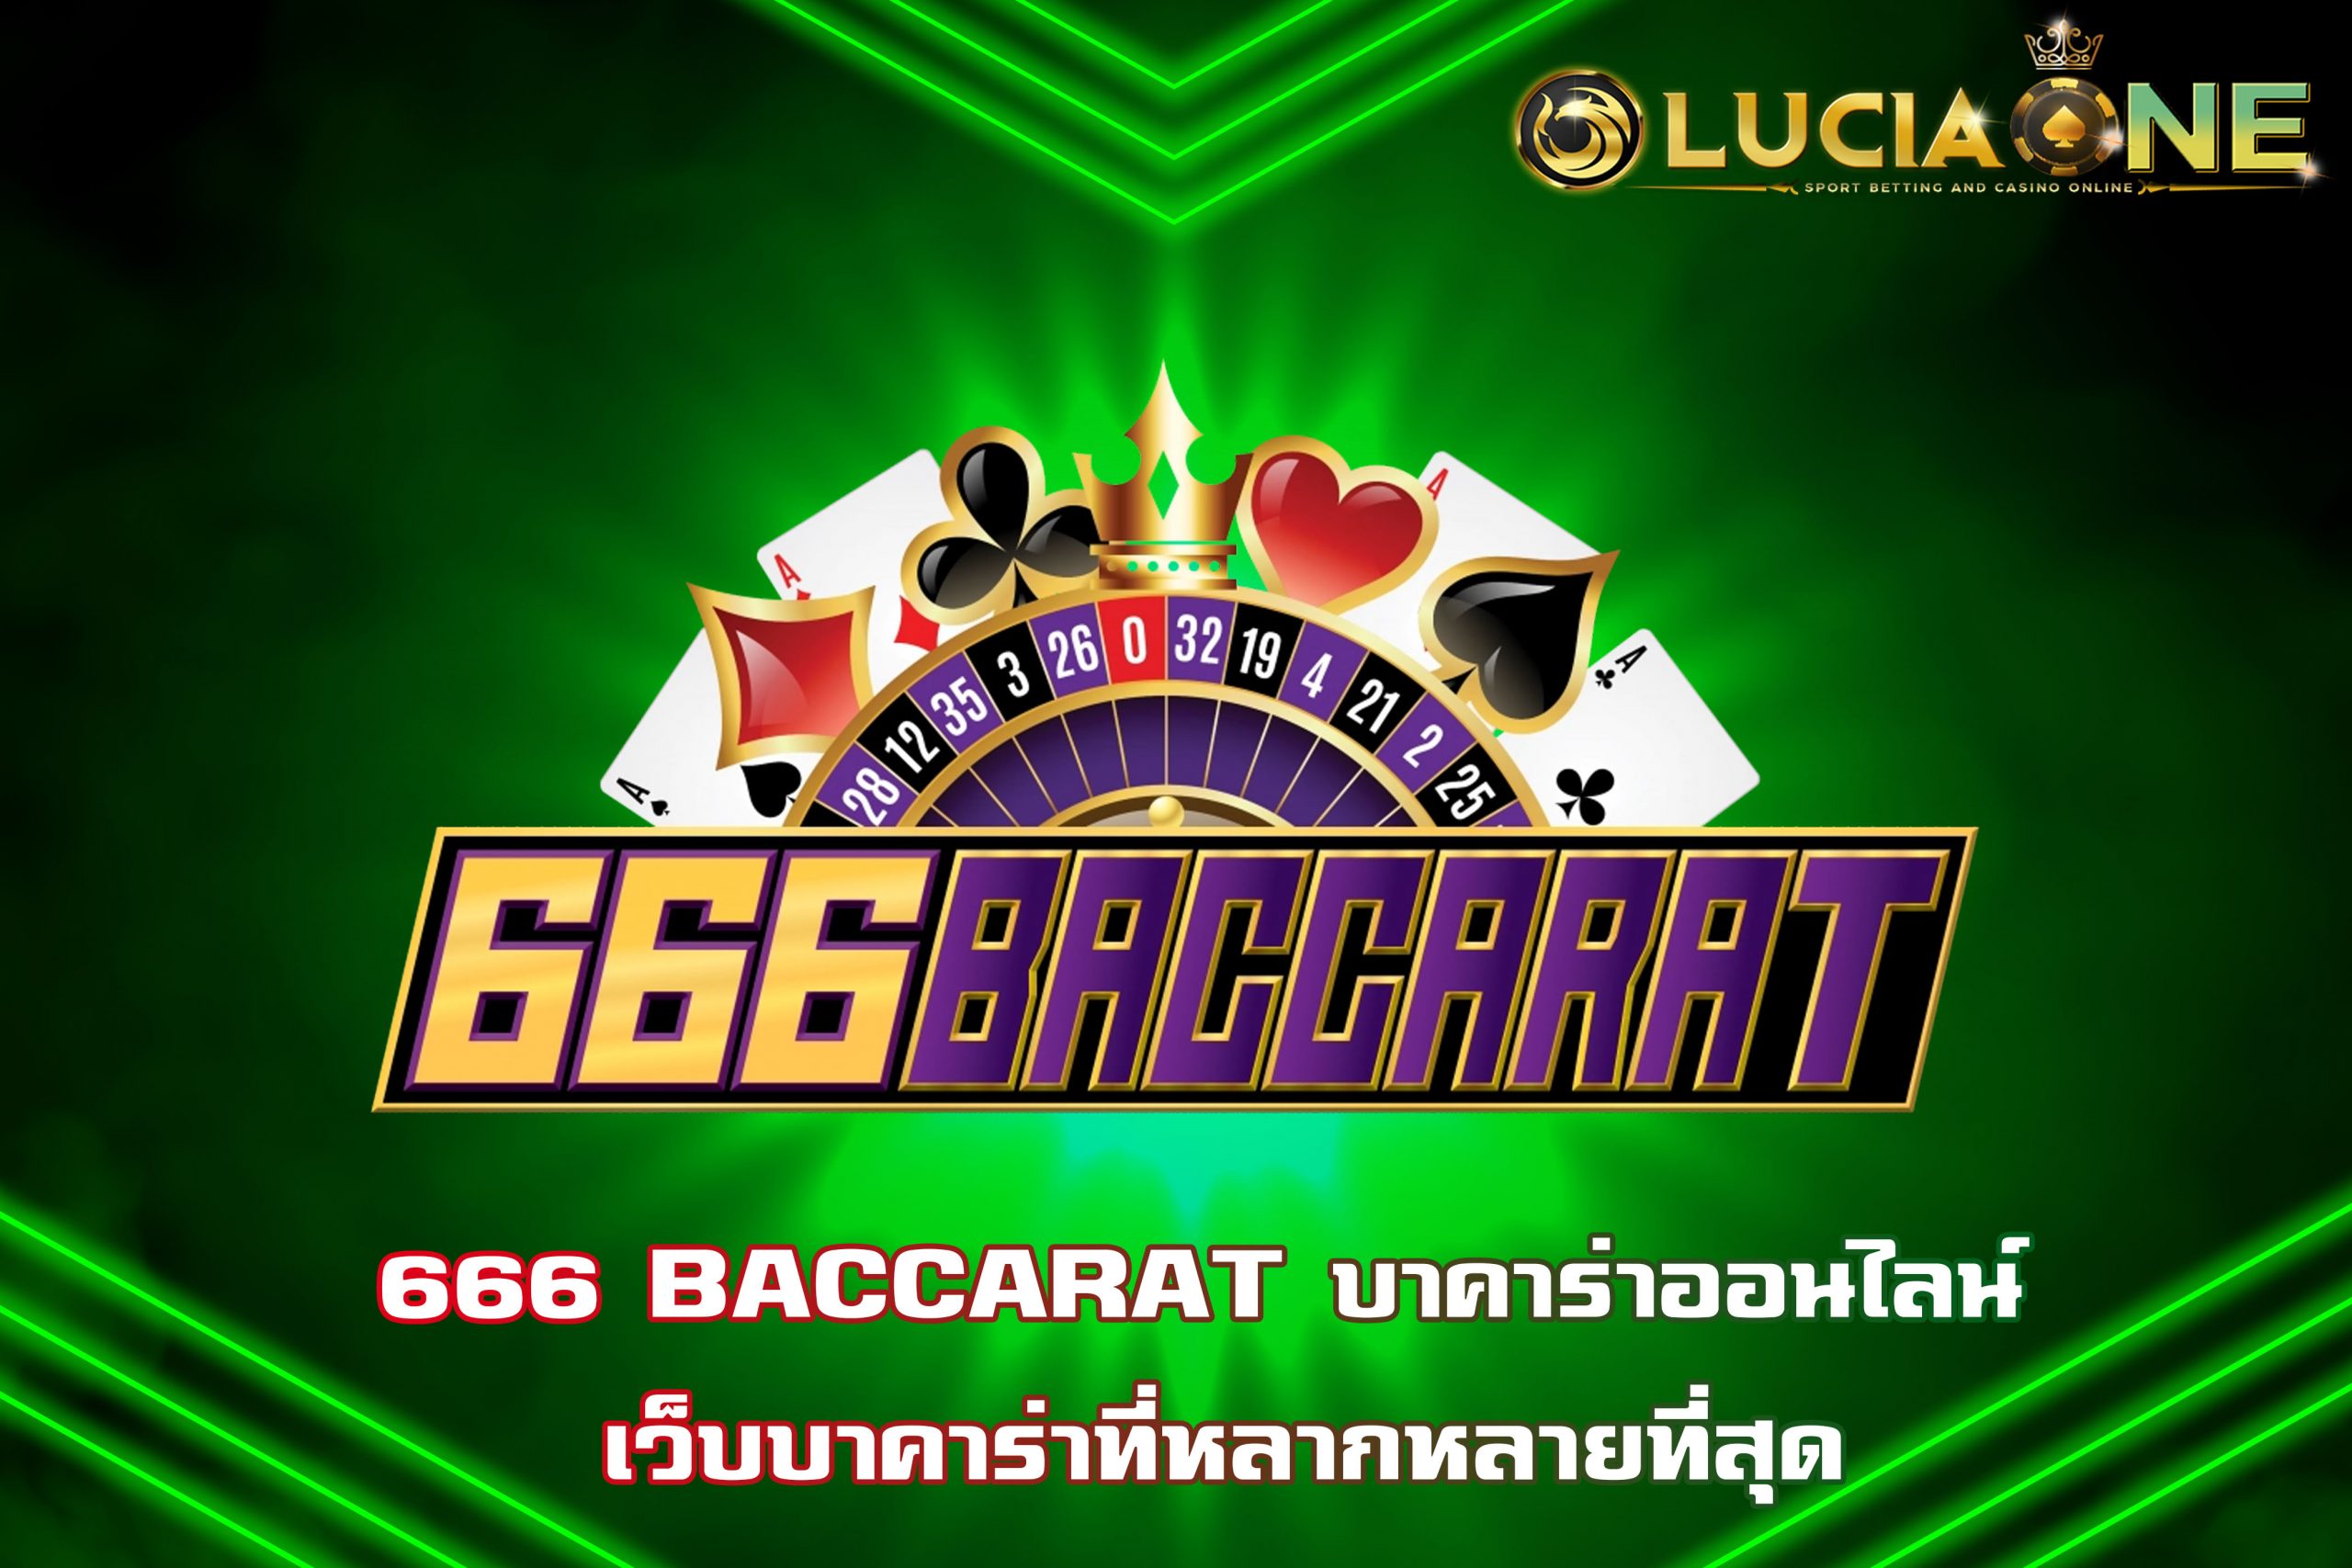 666 BACCARAT บาคาร่าออนไลน์ เว็บบาคาร่าที่หลากหลายที่สุด